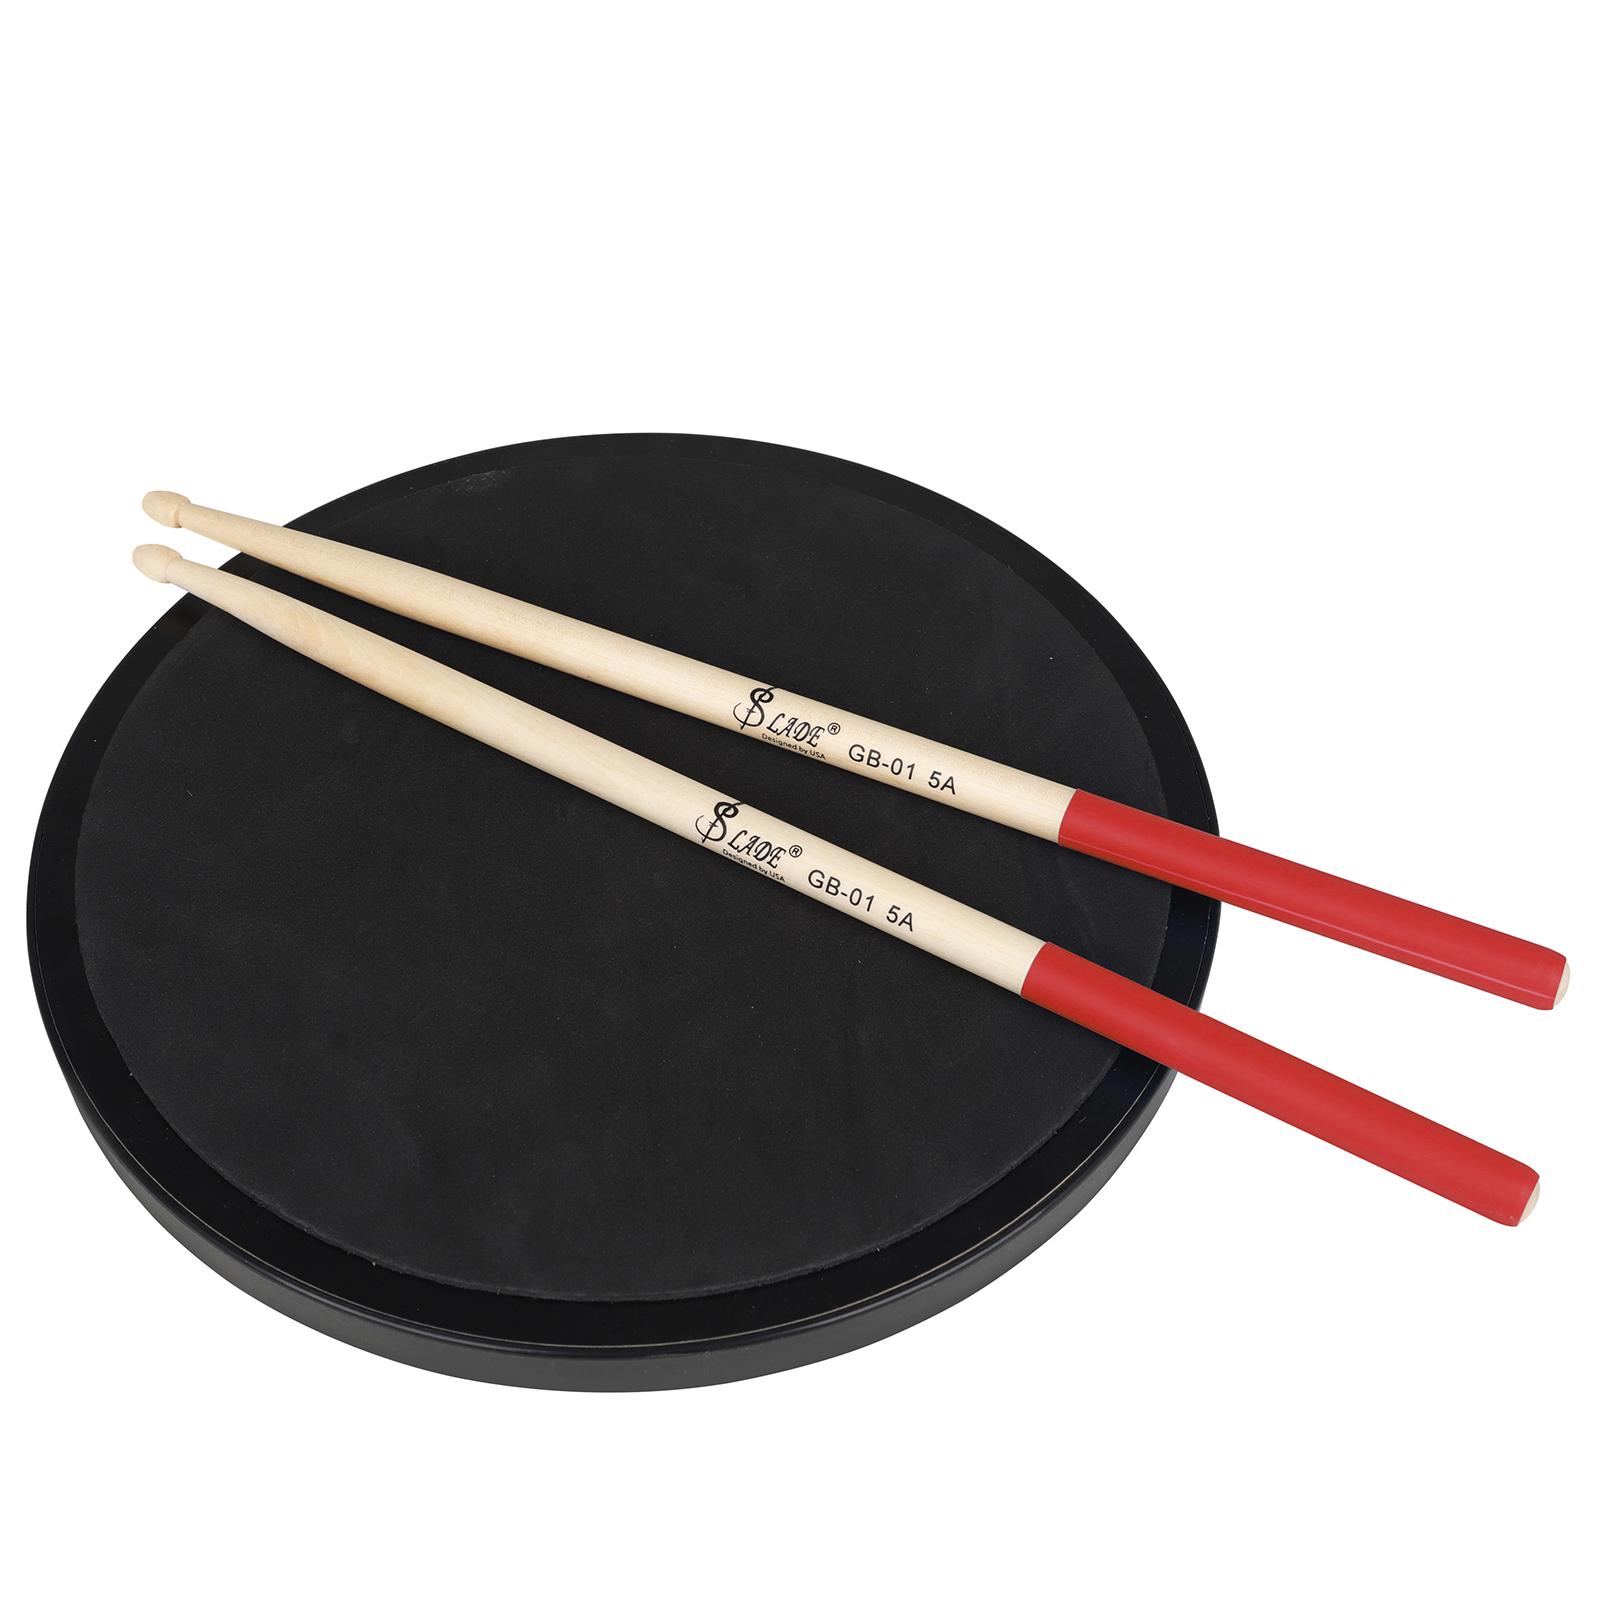 TOMTOP JMS SLADE 3 Pairs 5A Drum Sticks Maple Wood Drumsticks Triangular Tip Non-Slip Rubber Handle Musical